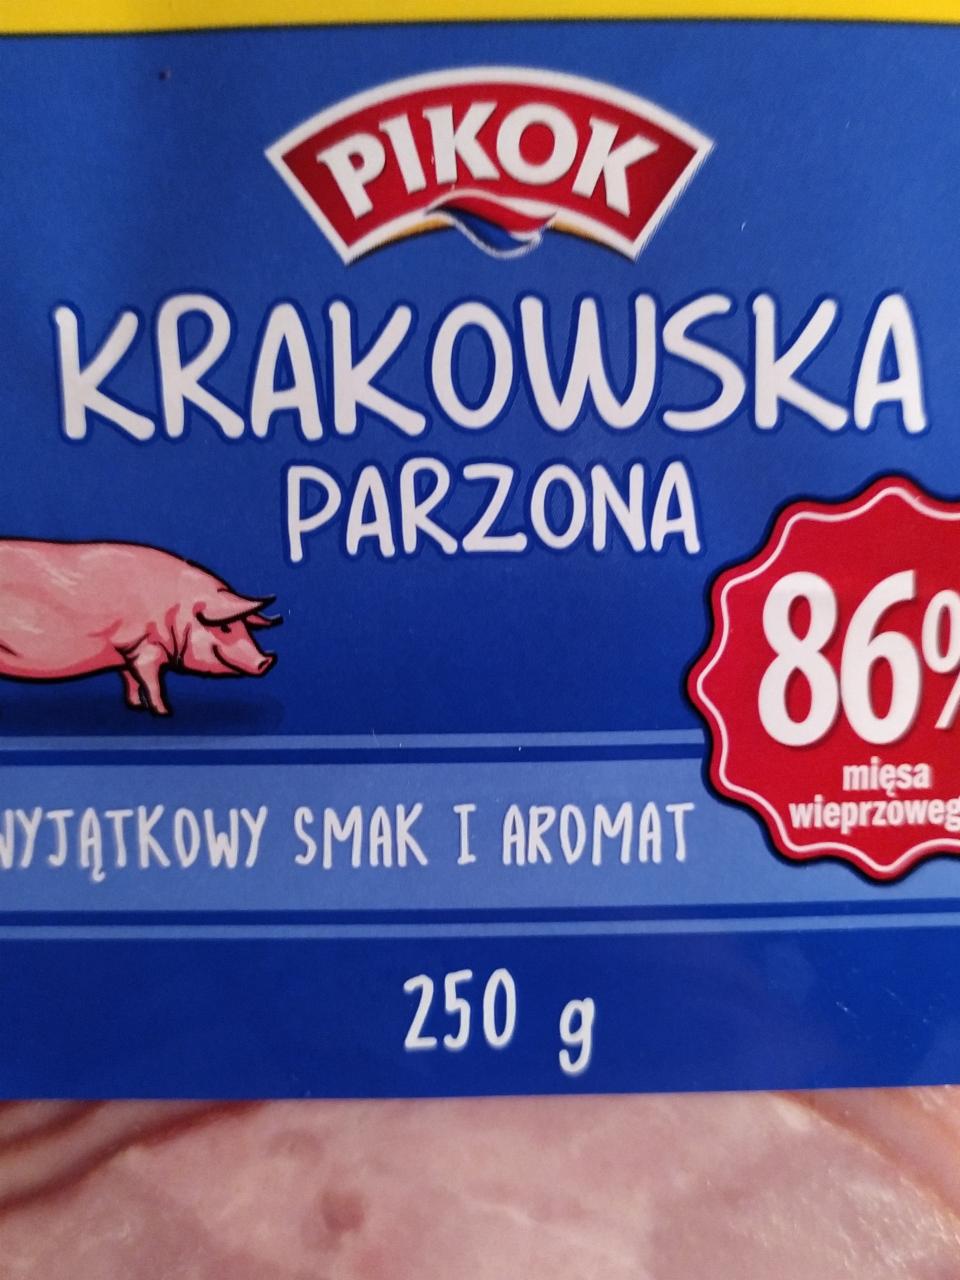 Fotografie - Krakowska parzona 86% mięsa Pikok